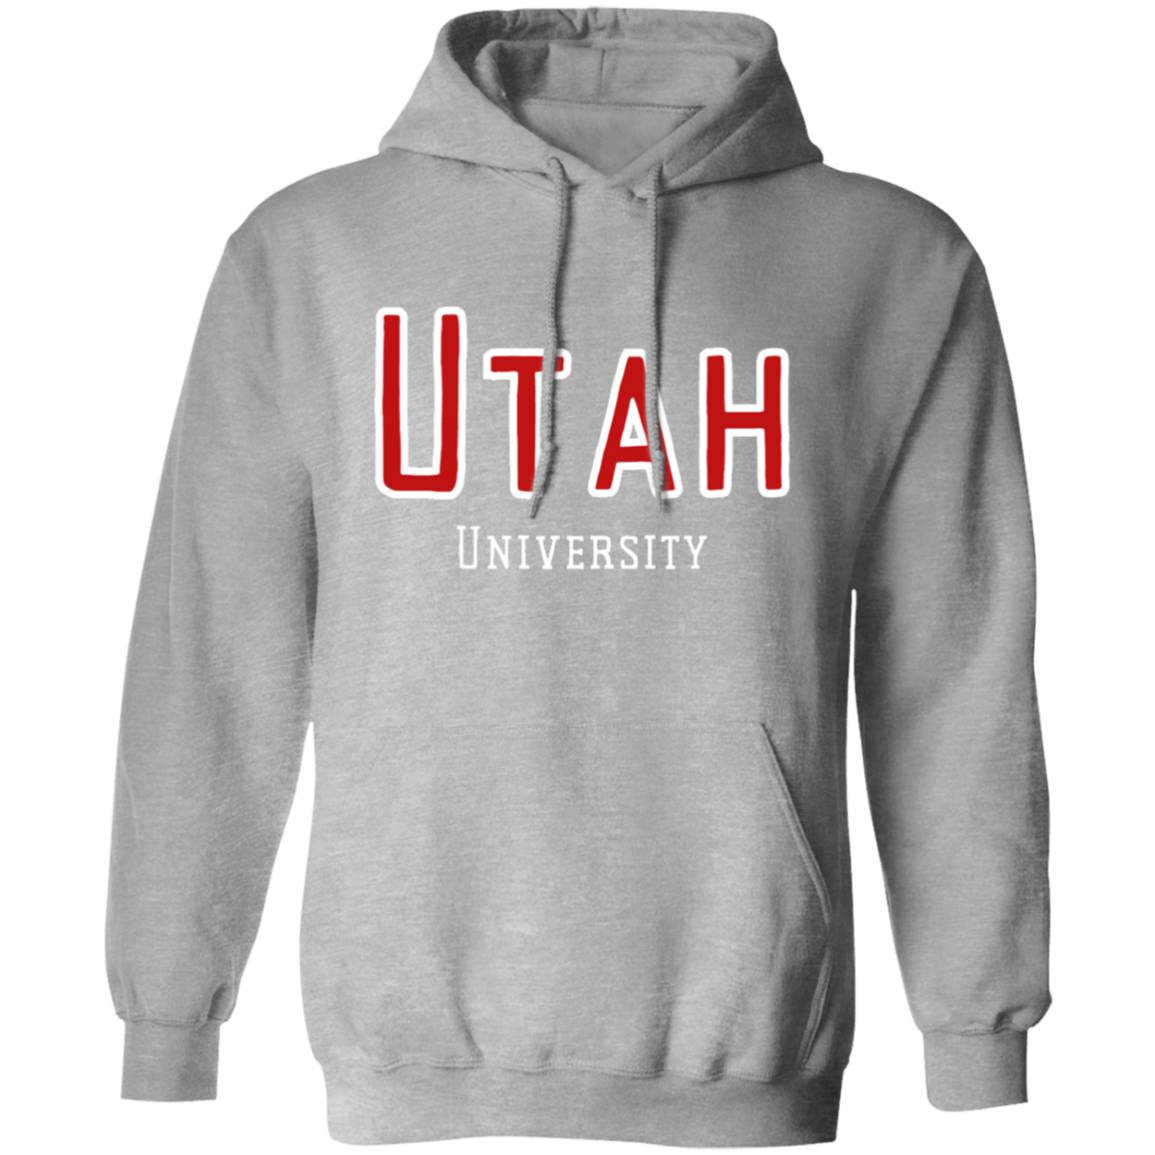 Utah University College Pullover Hoodie, Birthday Gift, Gift for Him, Her